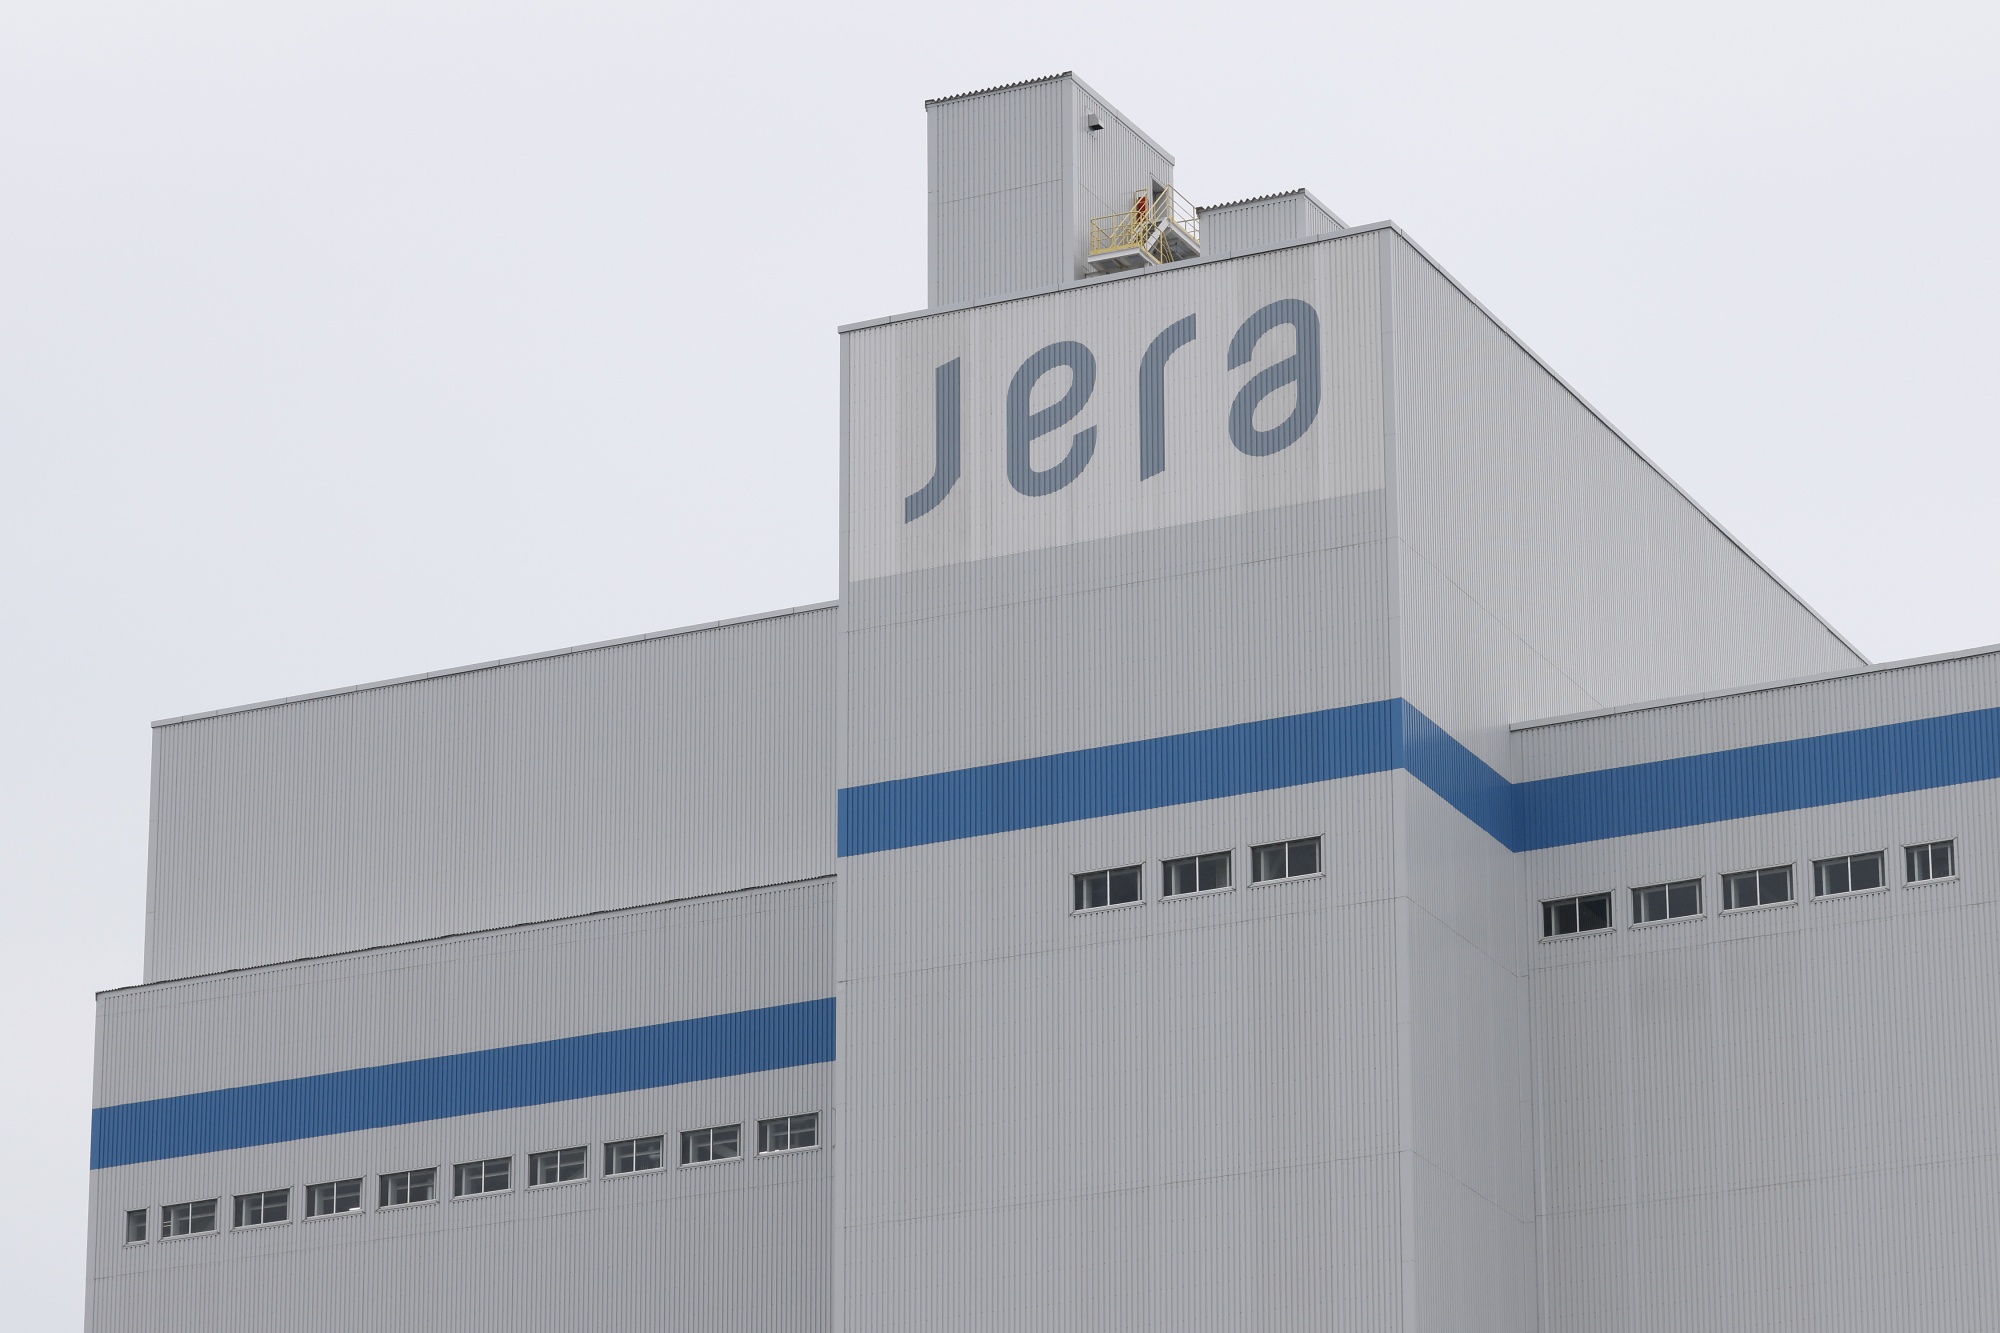 Jera building in Japan